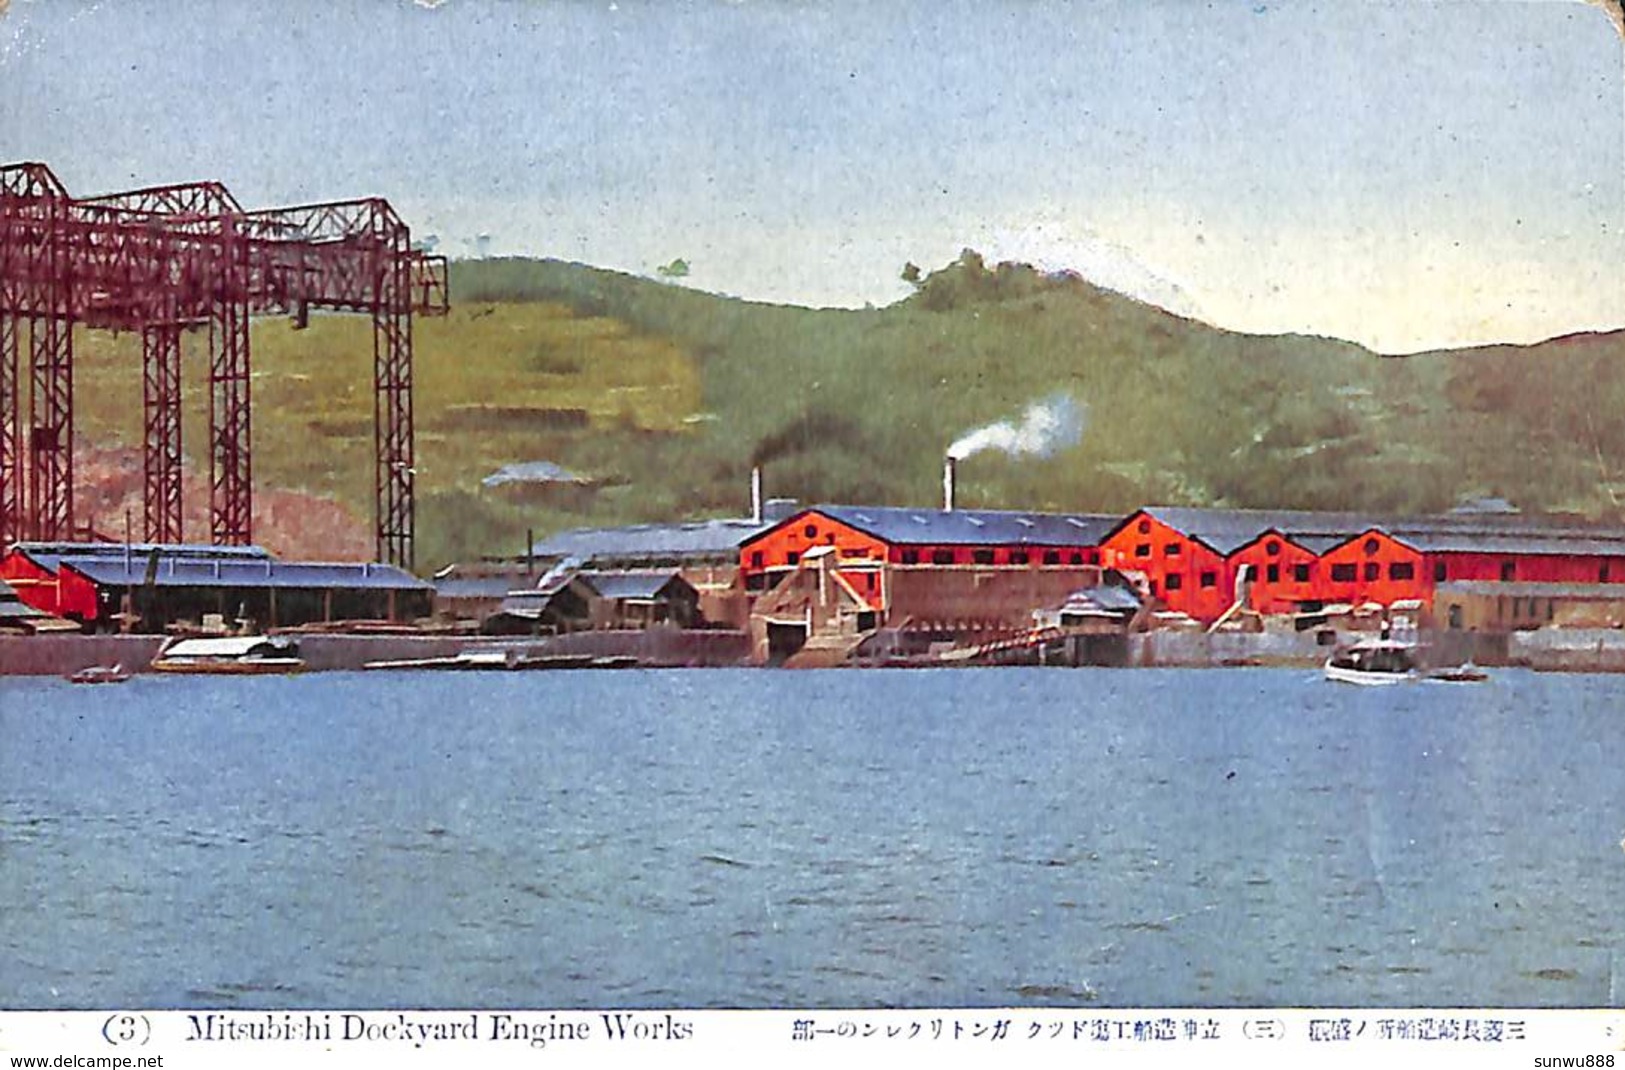 Mitsubishi Dockyard Engine Works (1911) - Yokohama